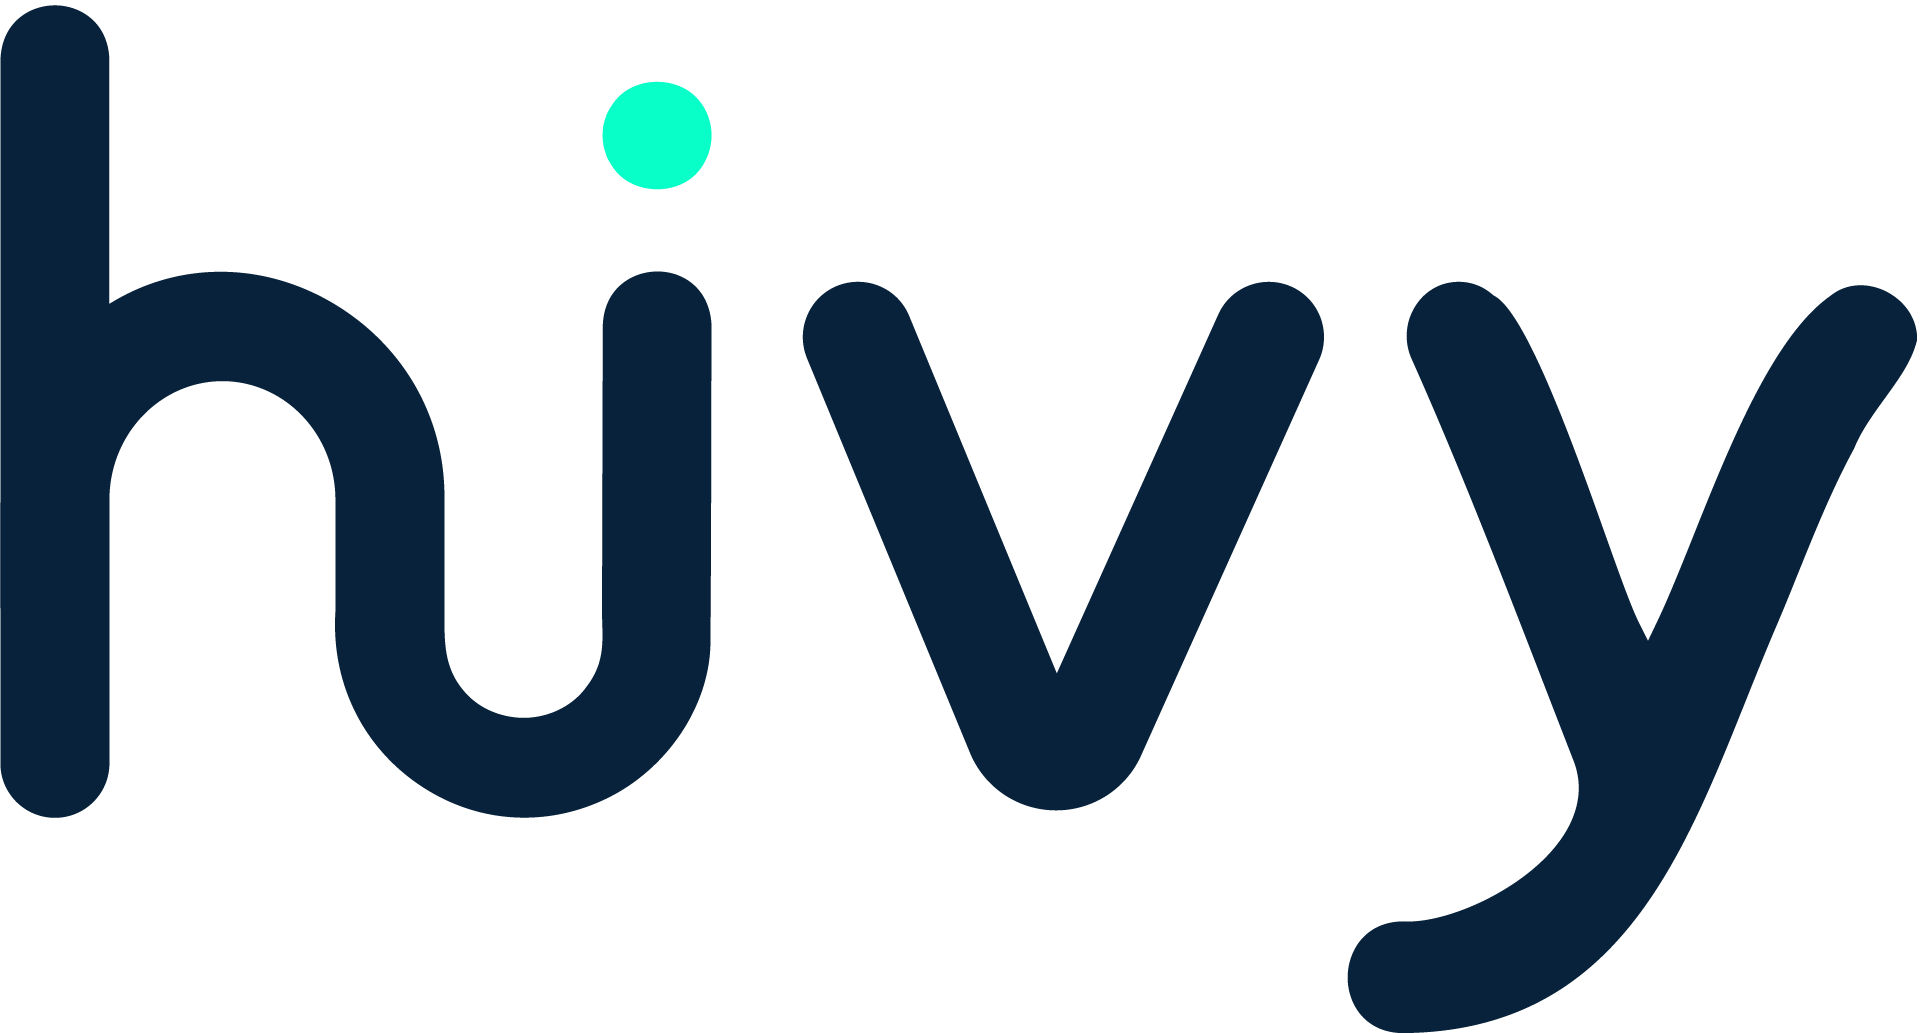 hivy-logo-hd